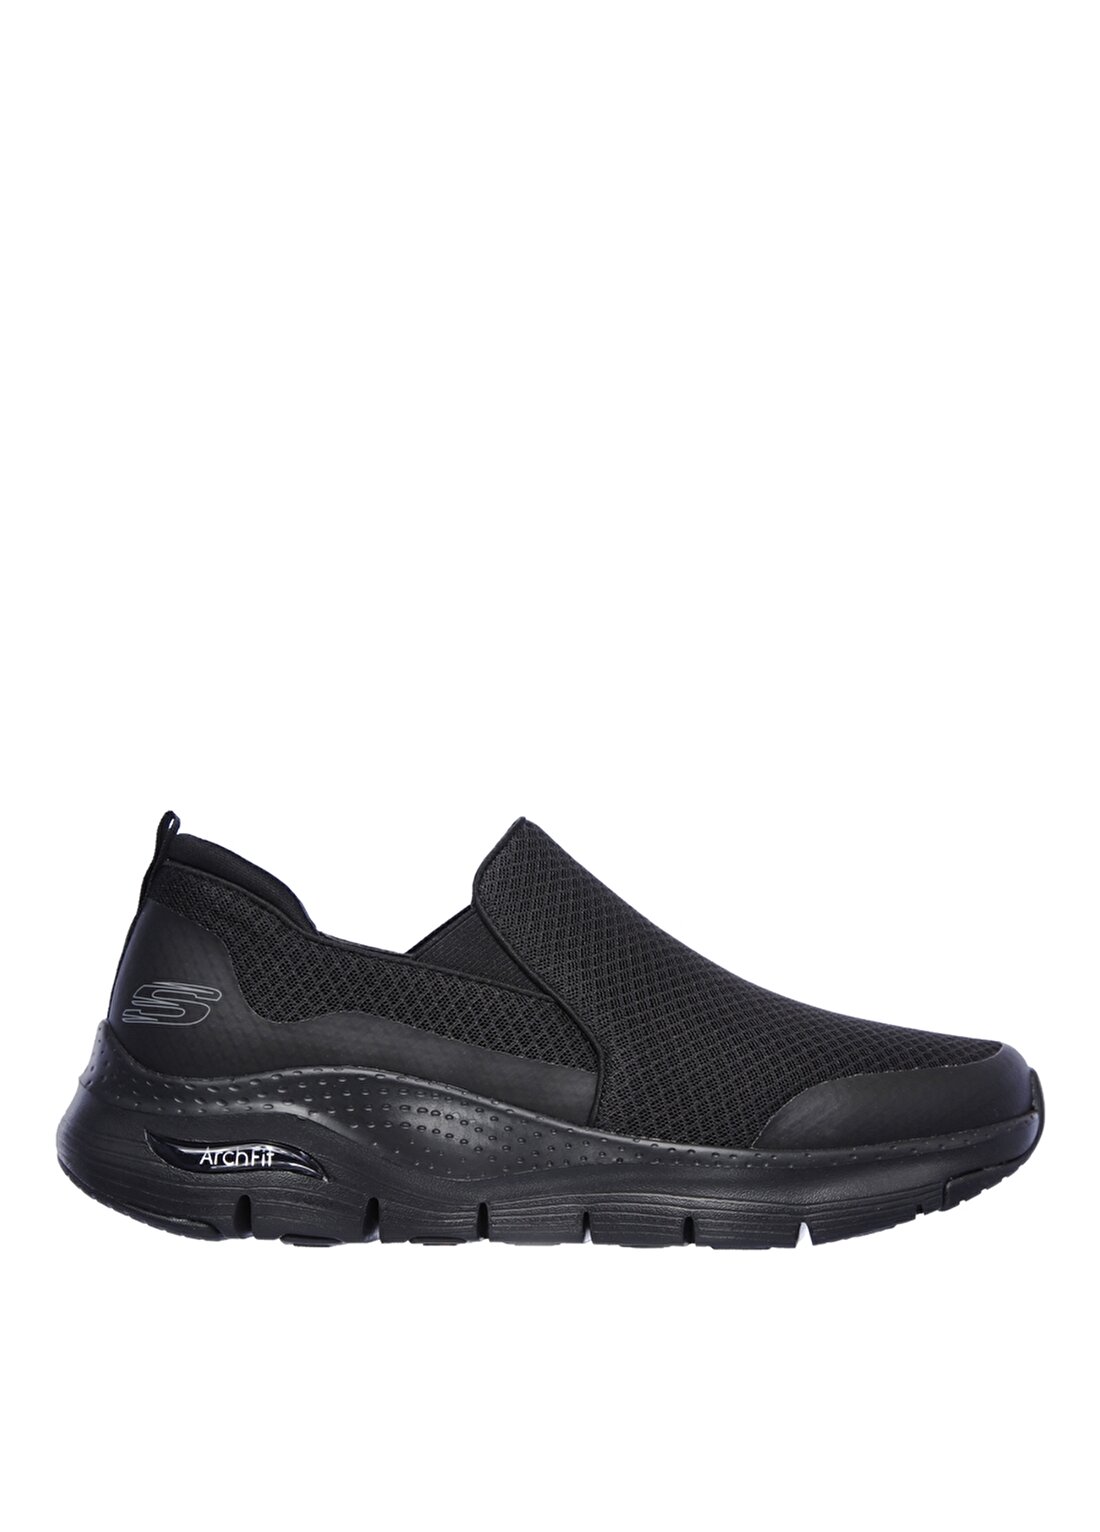 Skechers Arch Fit-Banlin Siyah Erkek Lifestyle Ayakkabı